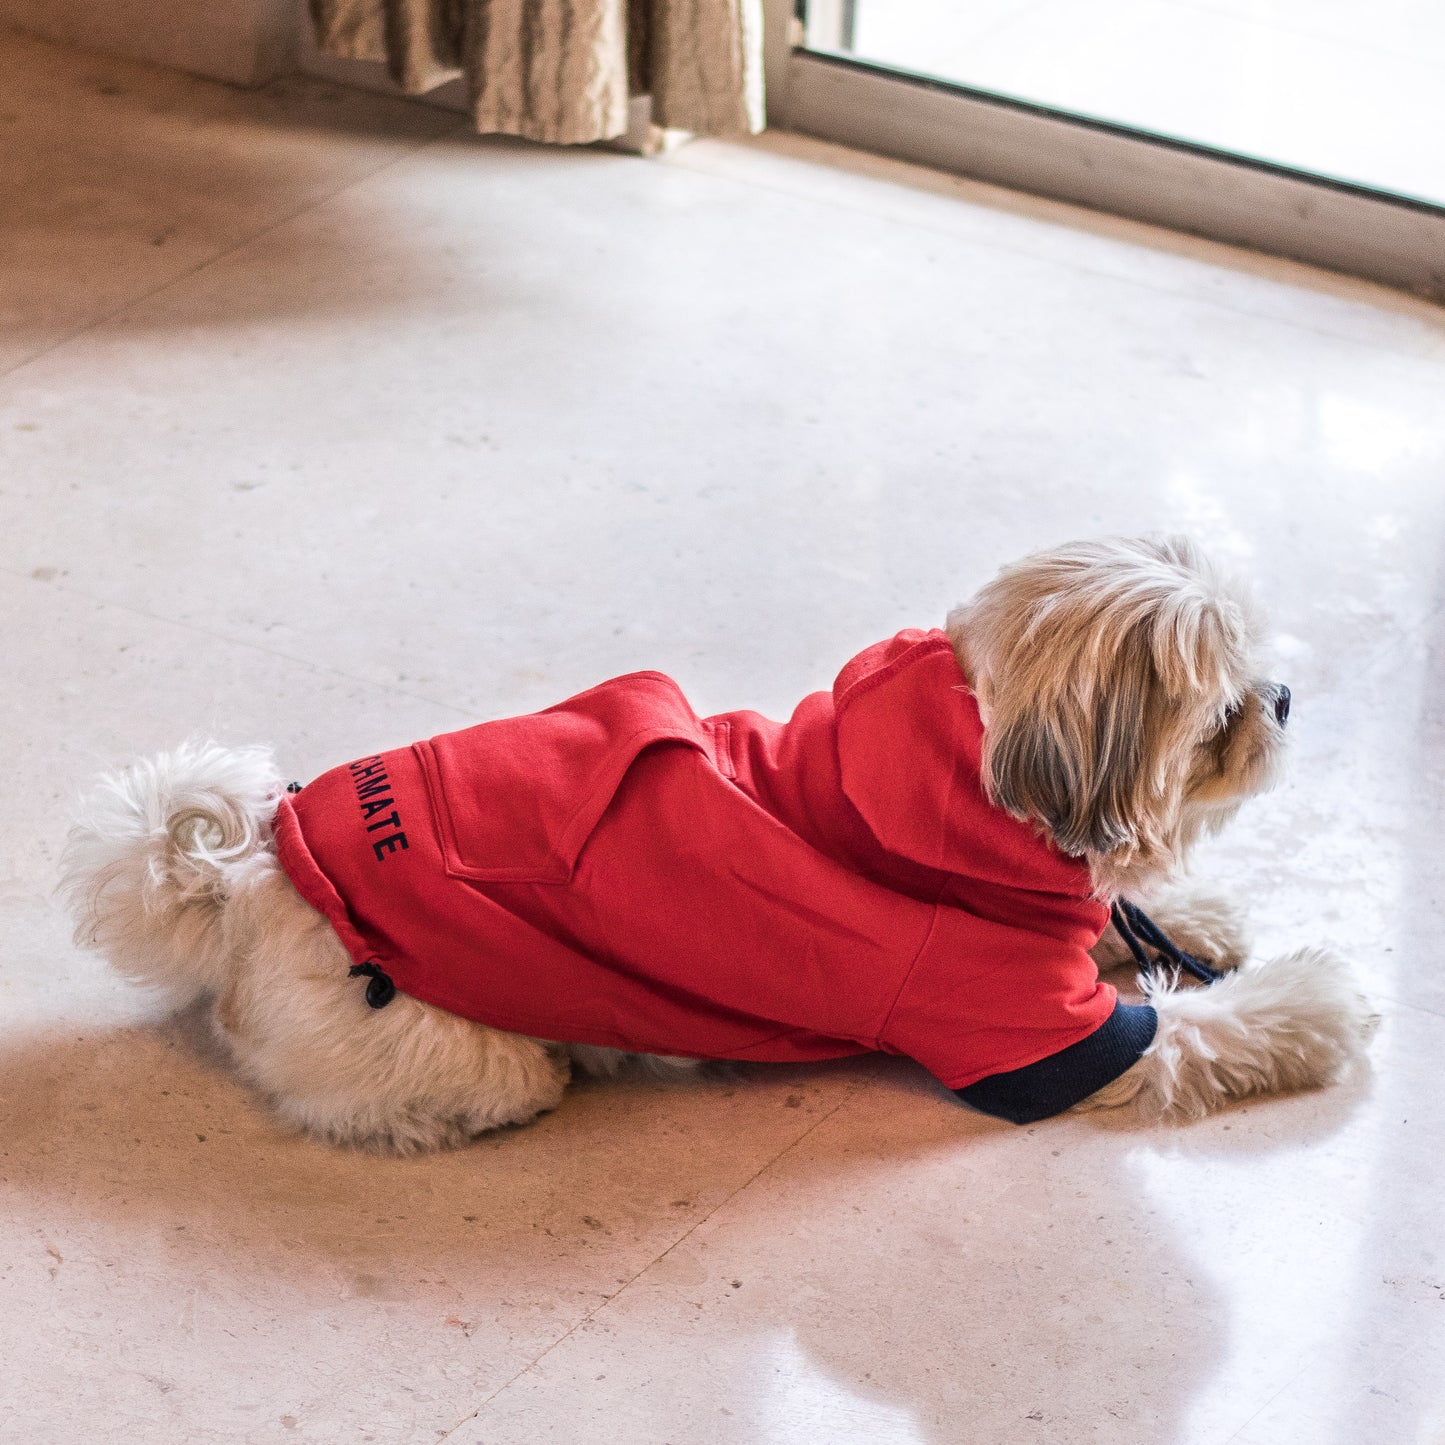 PoochMate Red Dog Sweatshirt